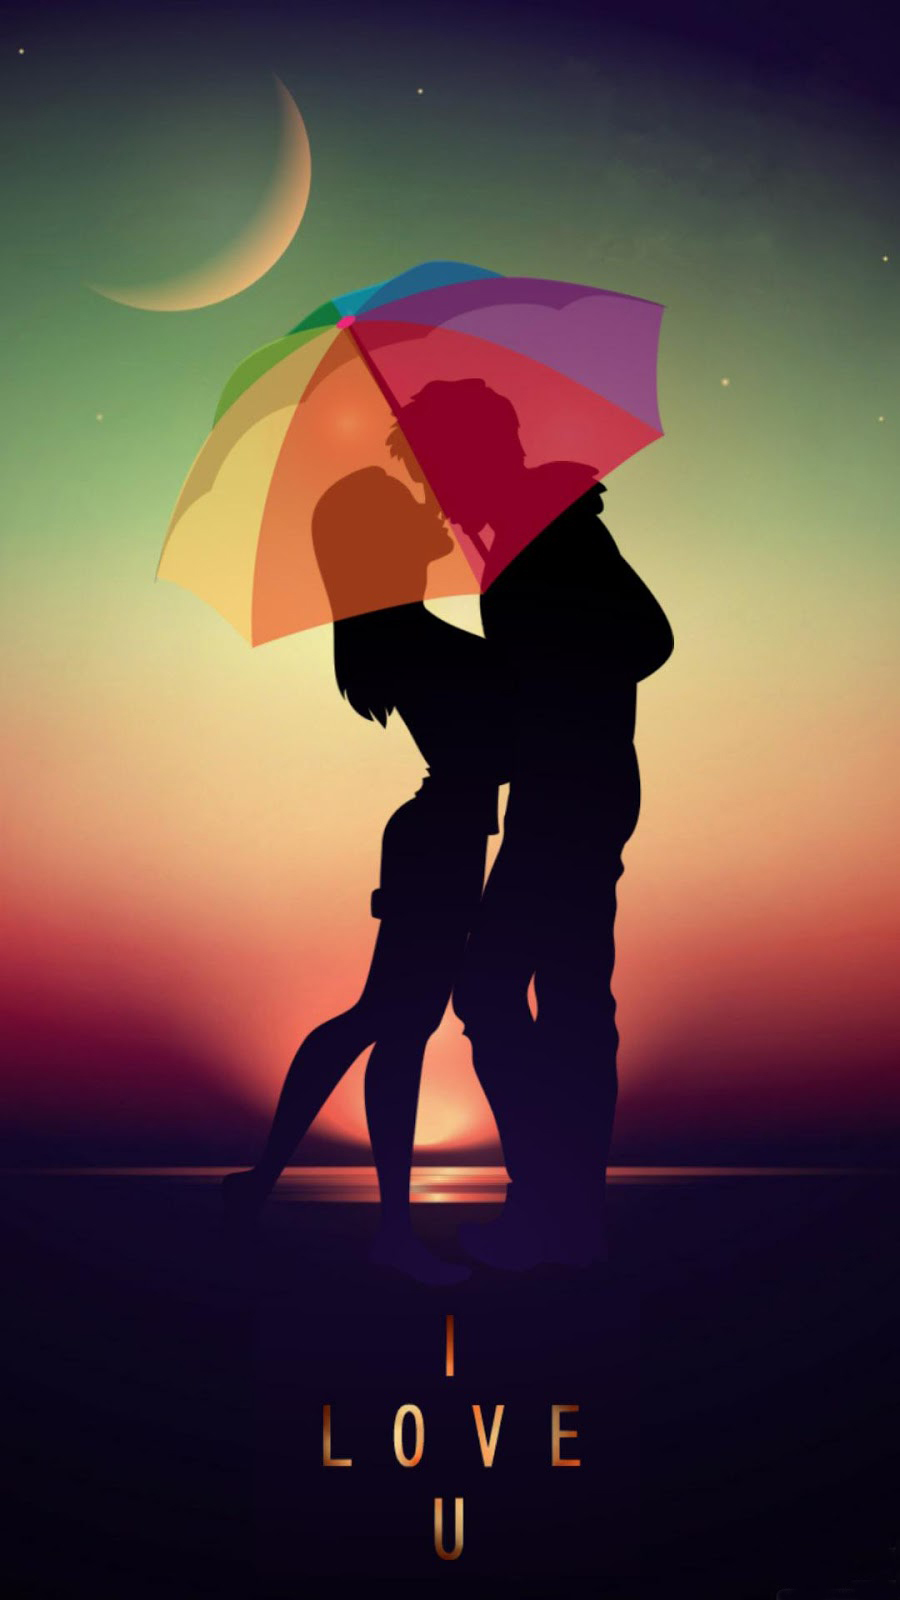 Romantic Couple Love | Mobile Wallpaper - HD Mobile Walls